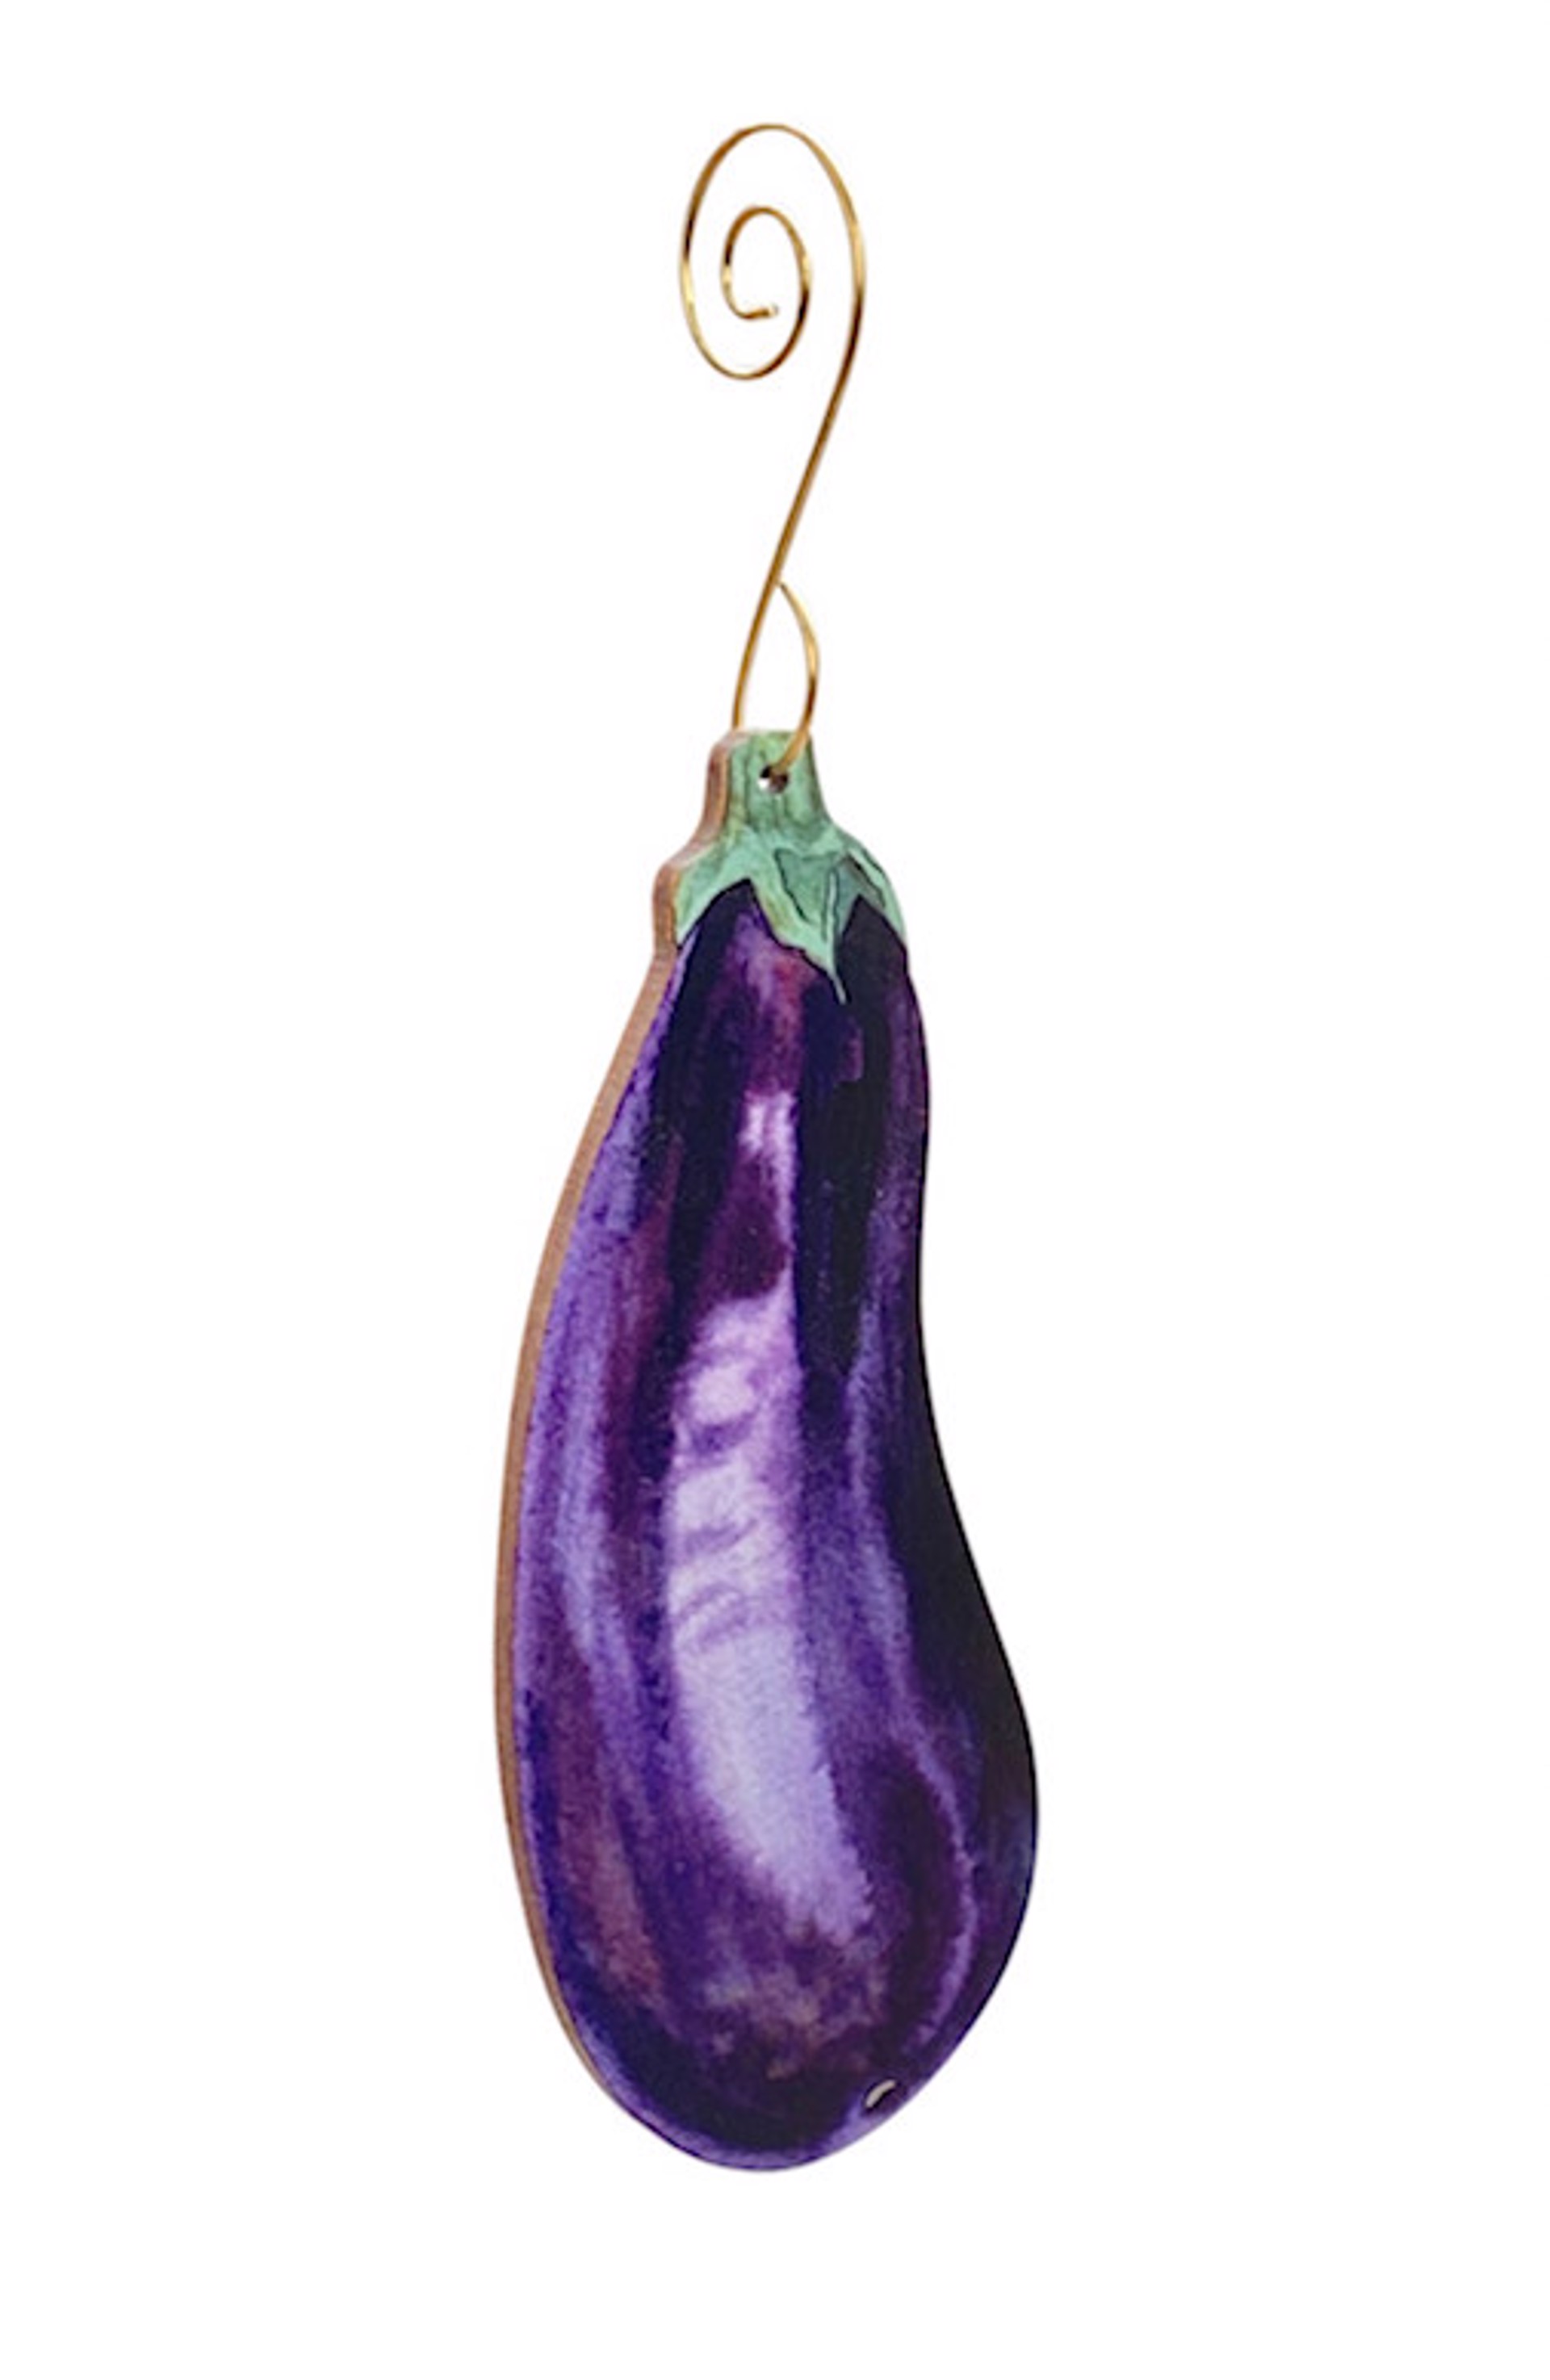 Ornament - Eggplant by Indigo Desert Ranch - Holiday